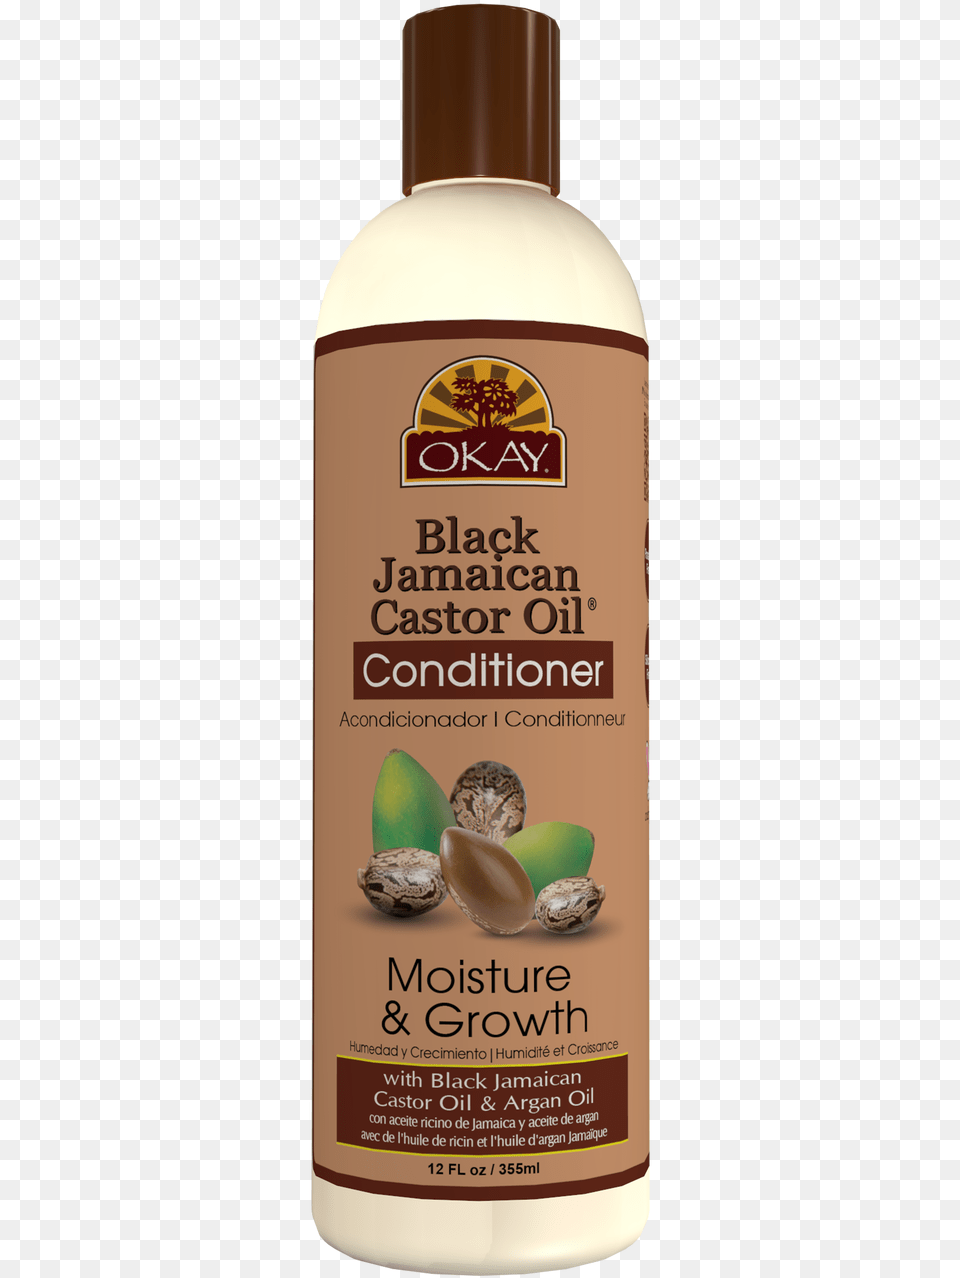 Okay Black Jamaican Castor Oil Moisture Growth Conditioner Okay Conditioner Castor Oil, Bottle, Lotion, Herbal, Herbs Free Png Download